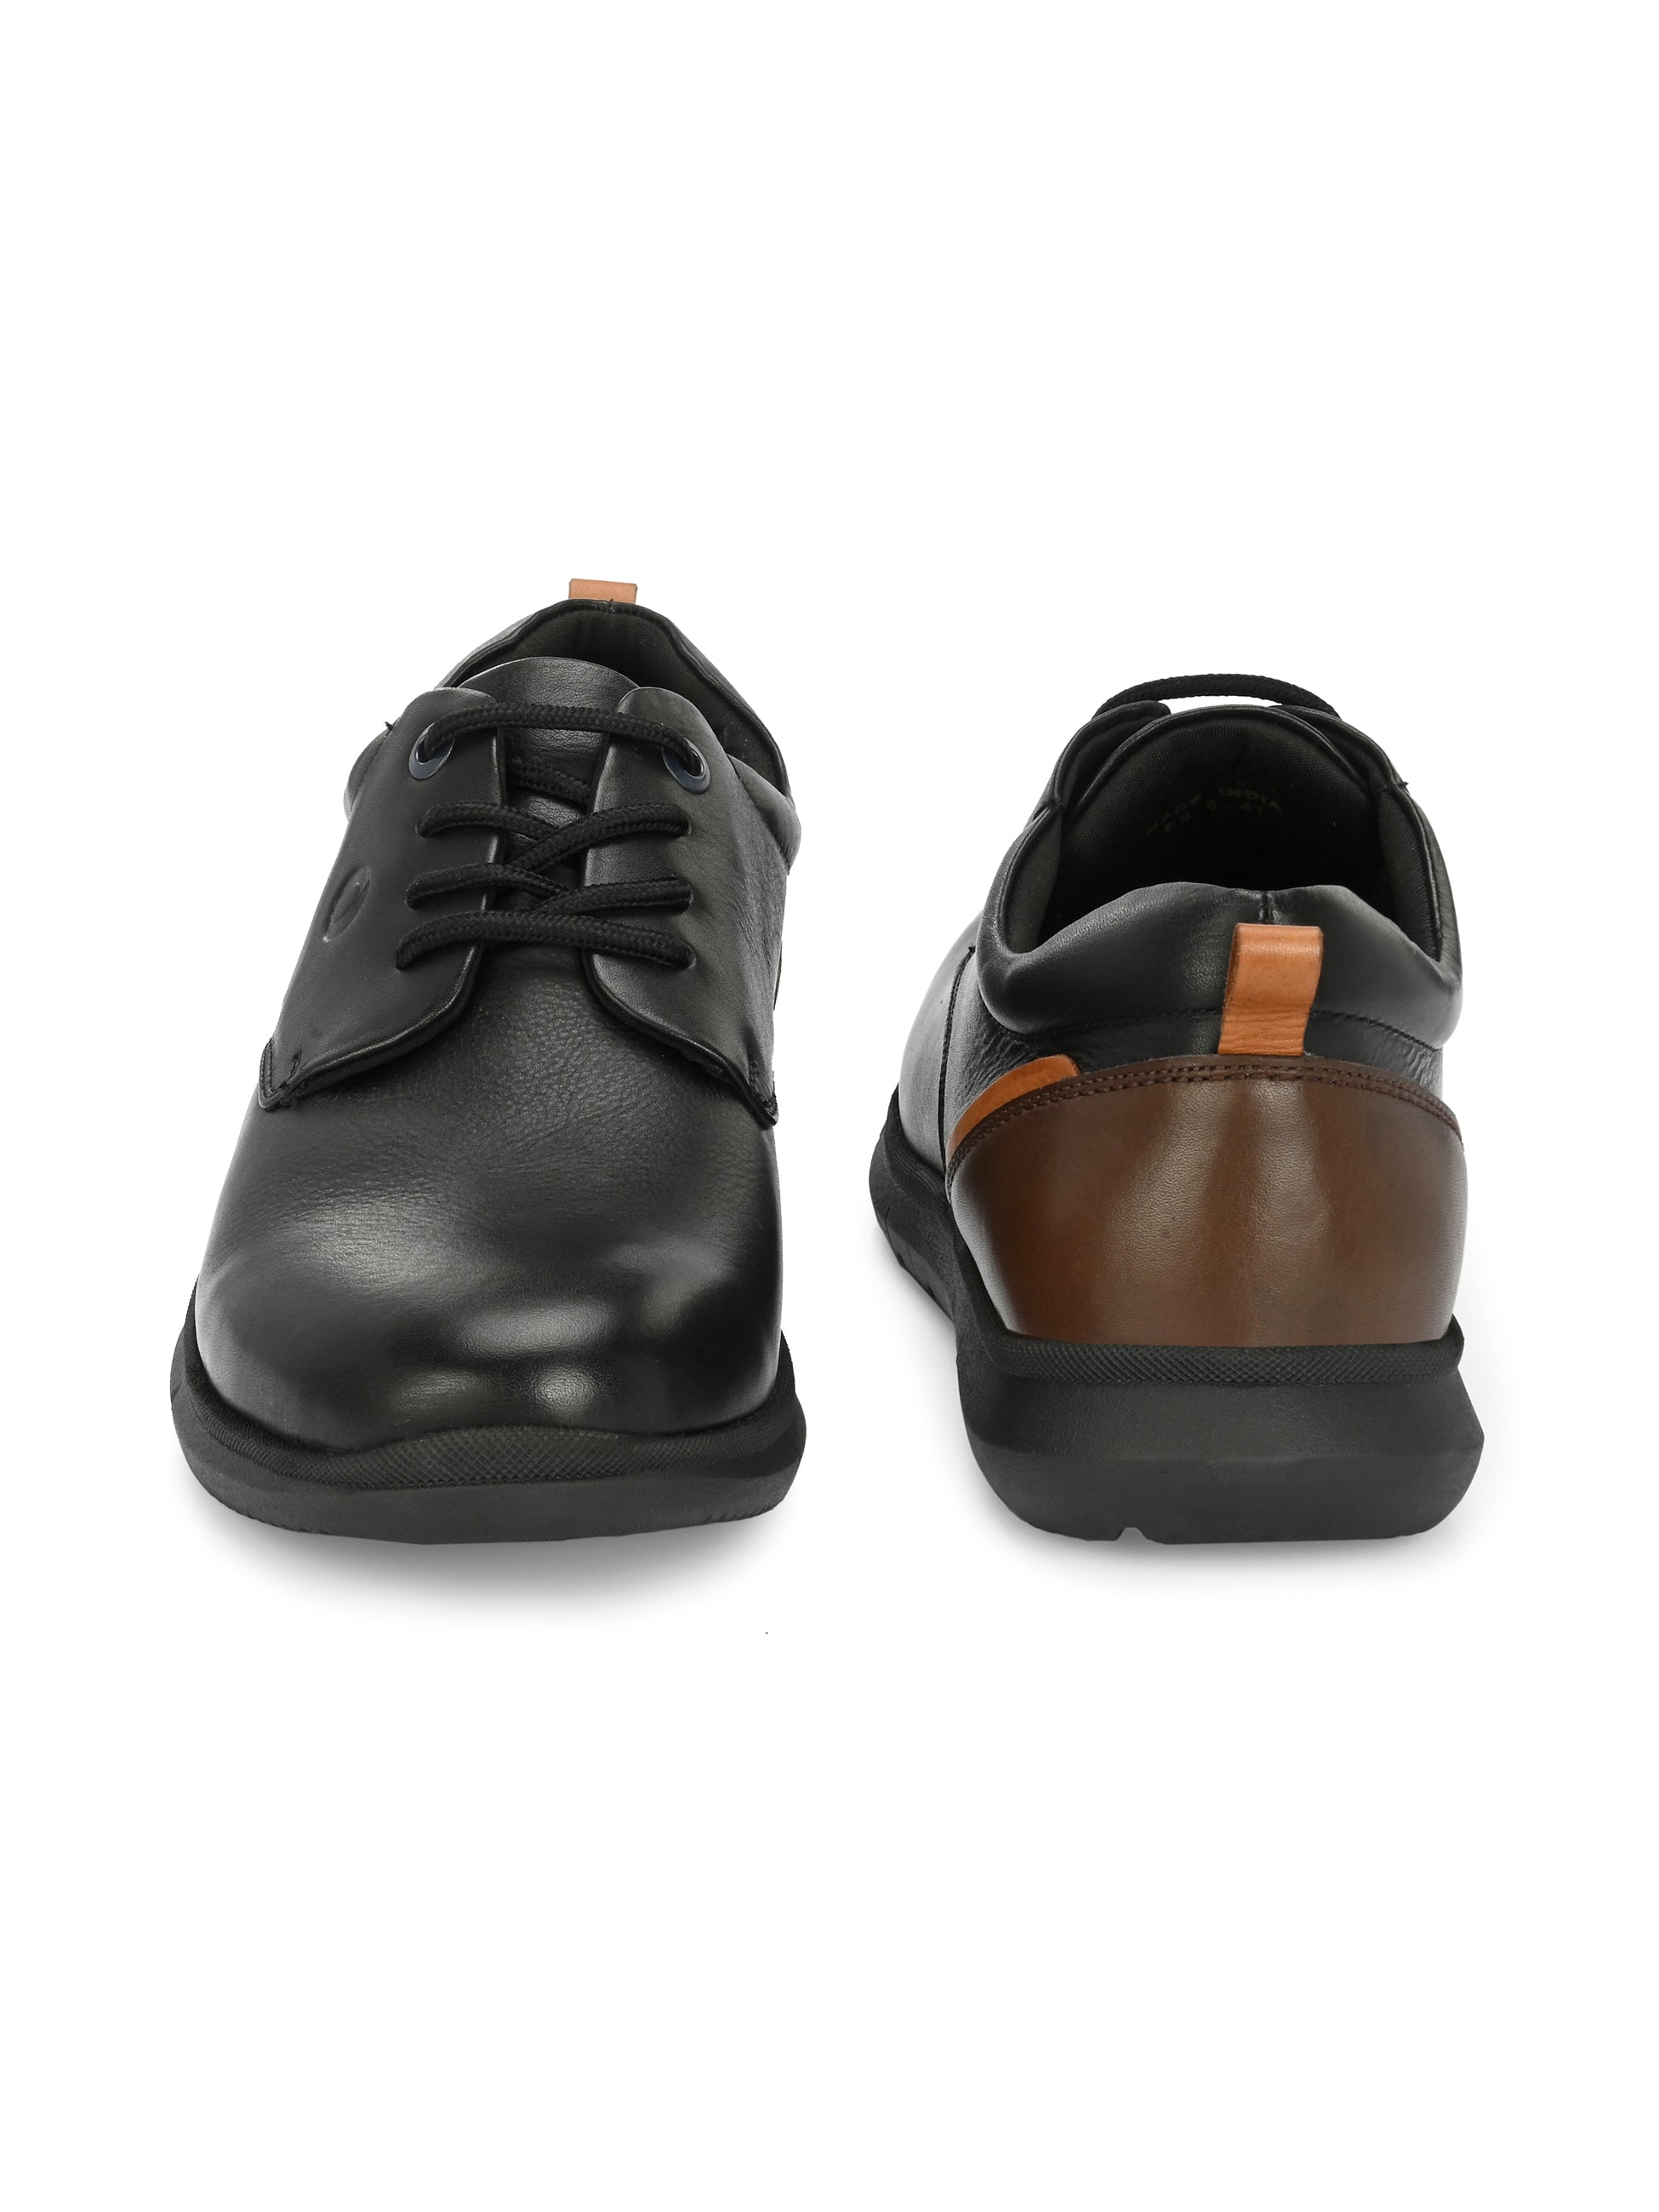 WIFKLSIIPG Leather Sneakers Fashion Men Leather Shoes Large India | Ubuy